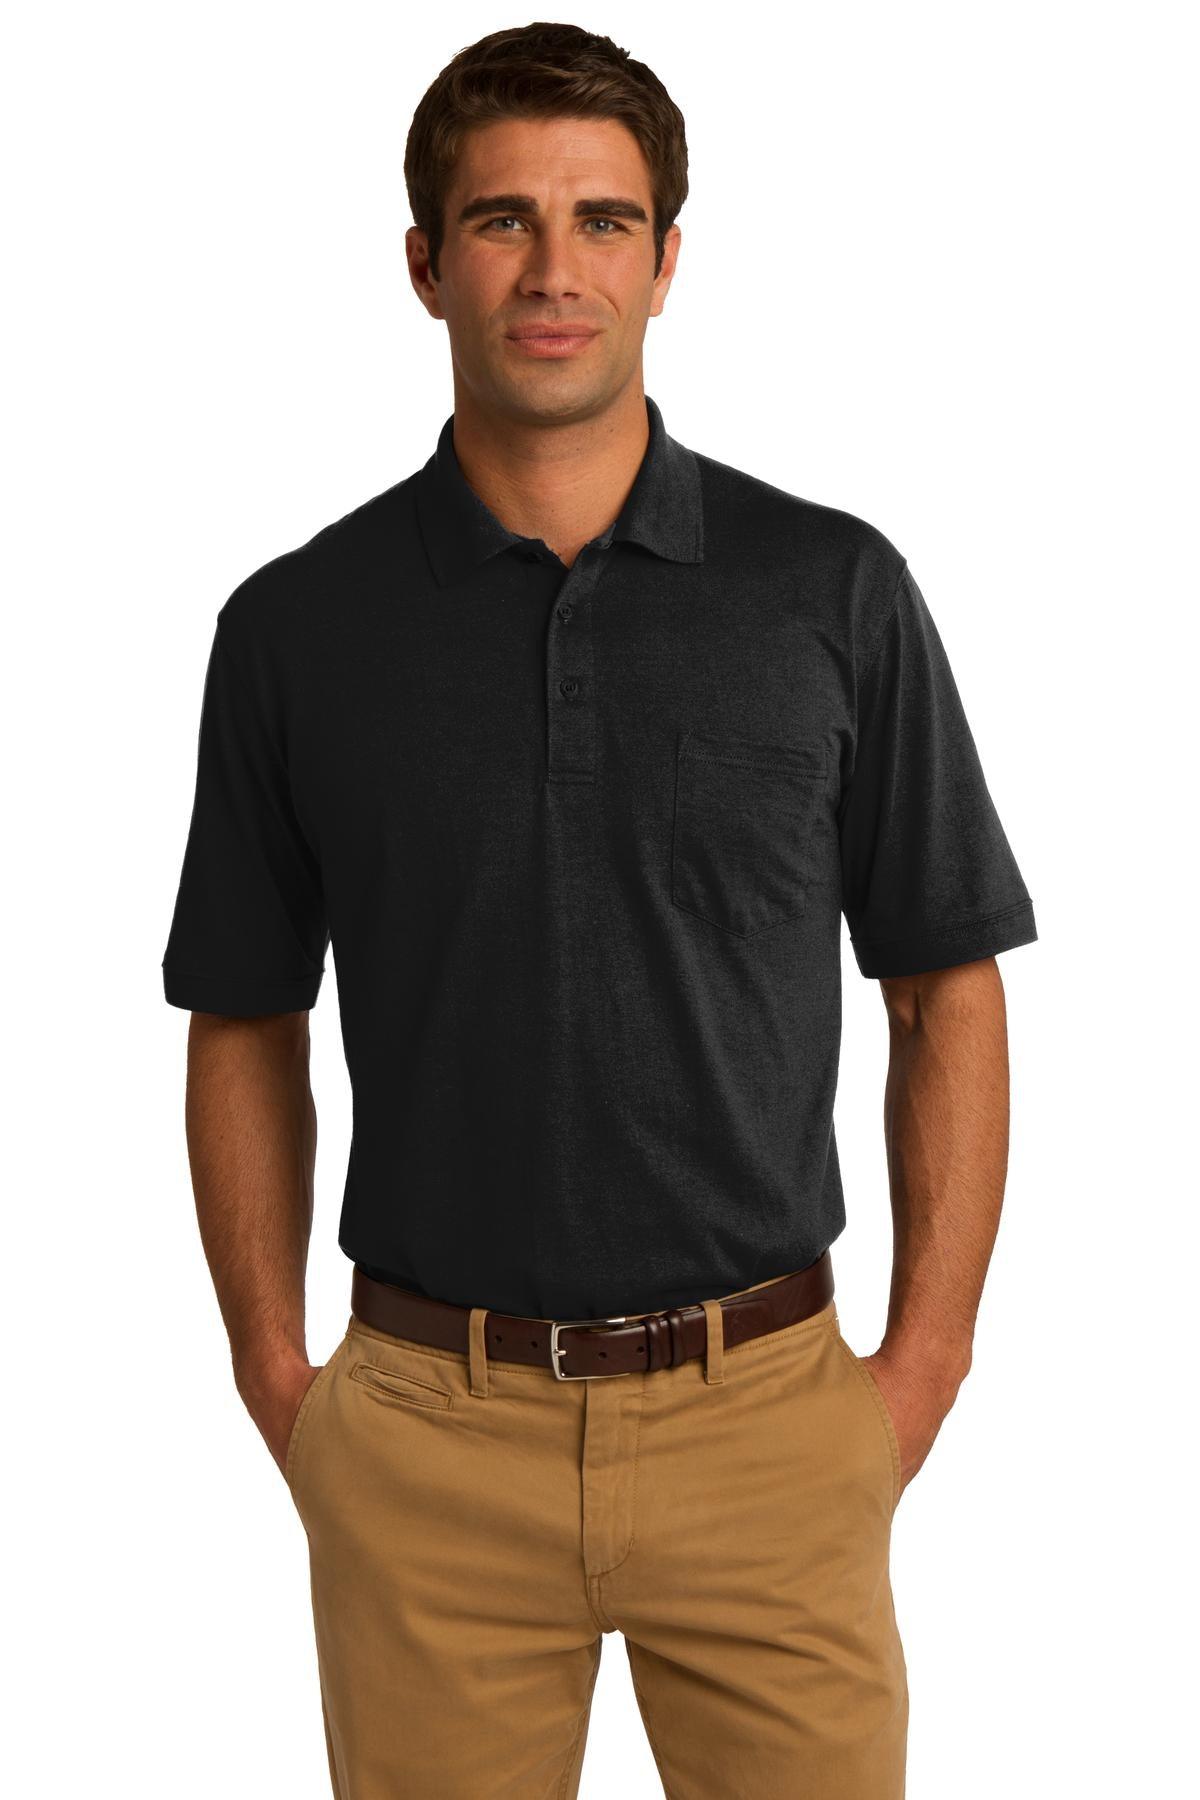 Port & Company Core Blend Jersey Knit Pocket Polo. KP55P - Dresses Max